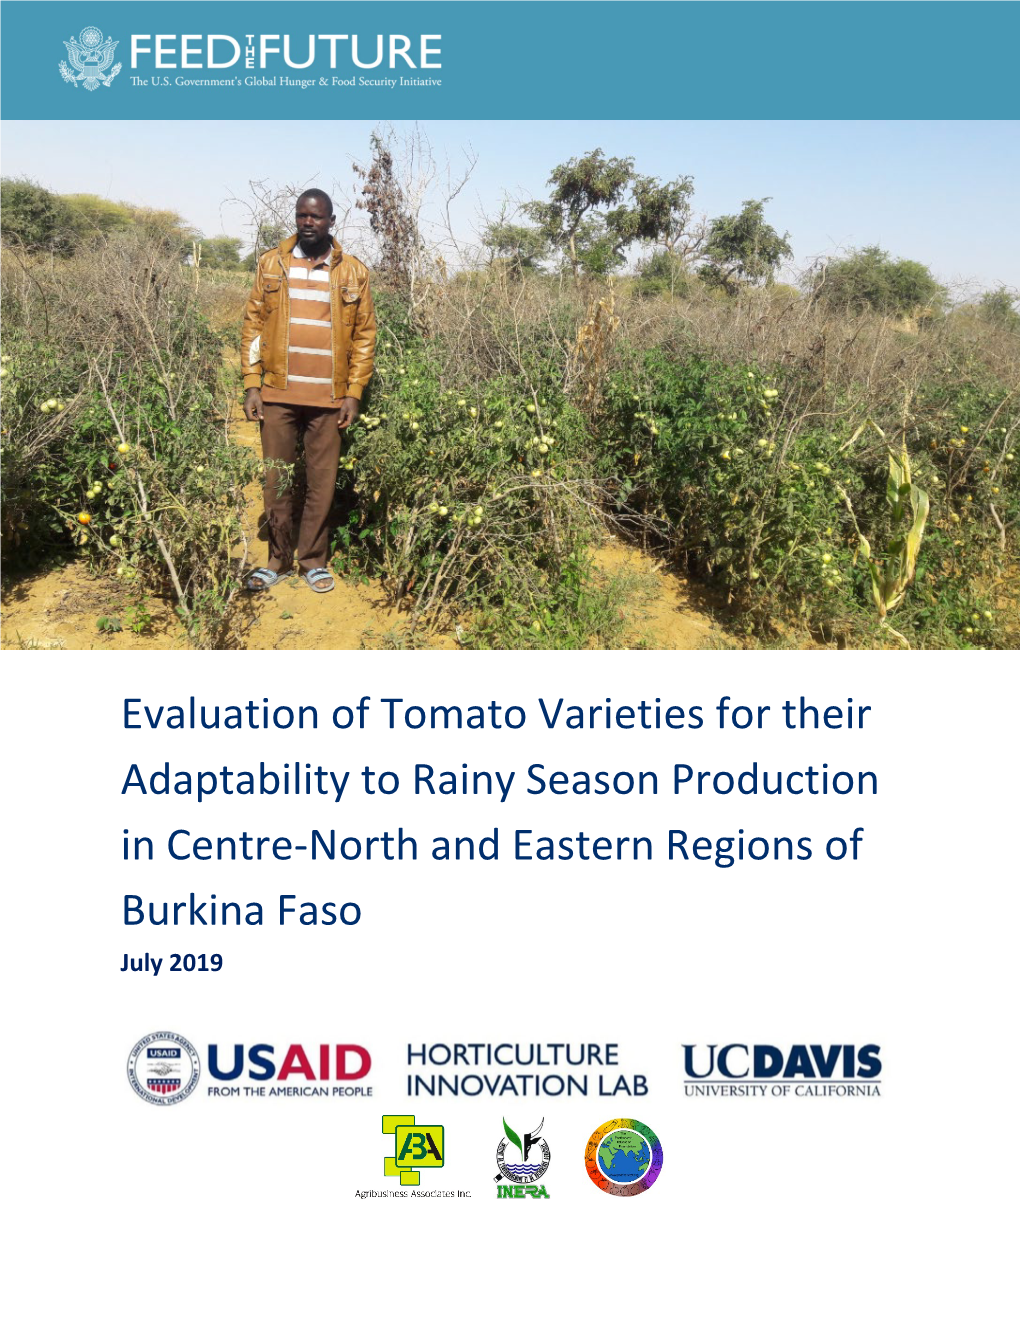 Burkina Faso Rainy Season Tomato Trial Report